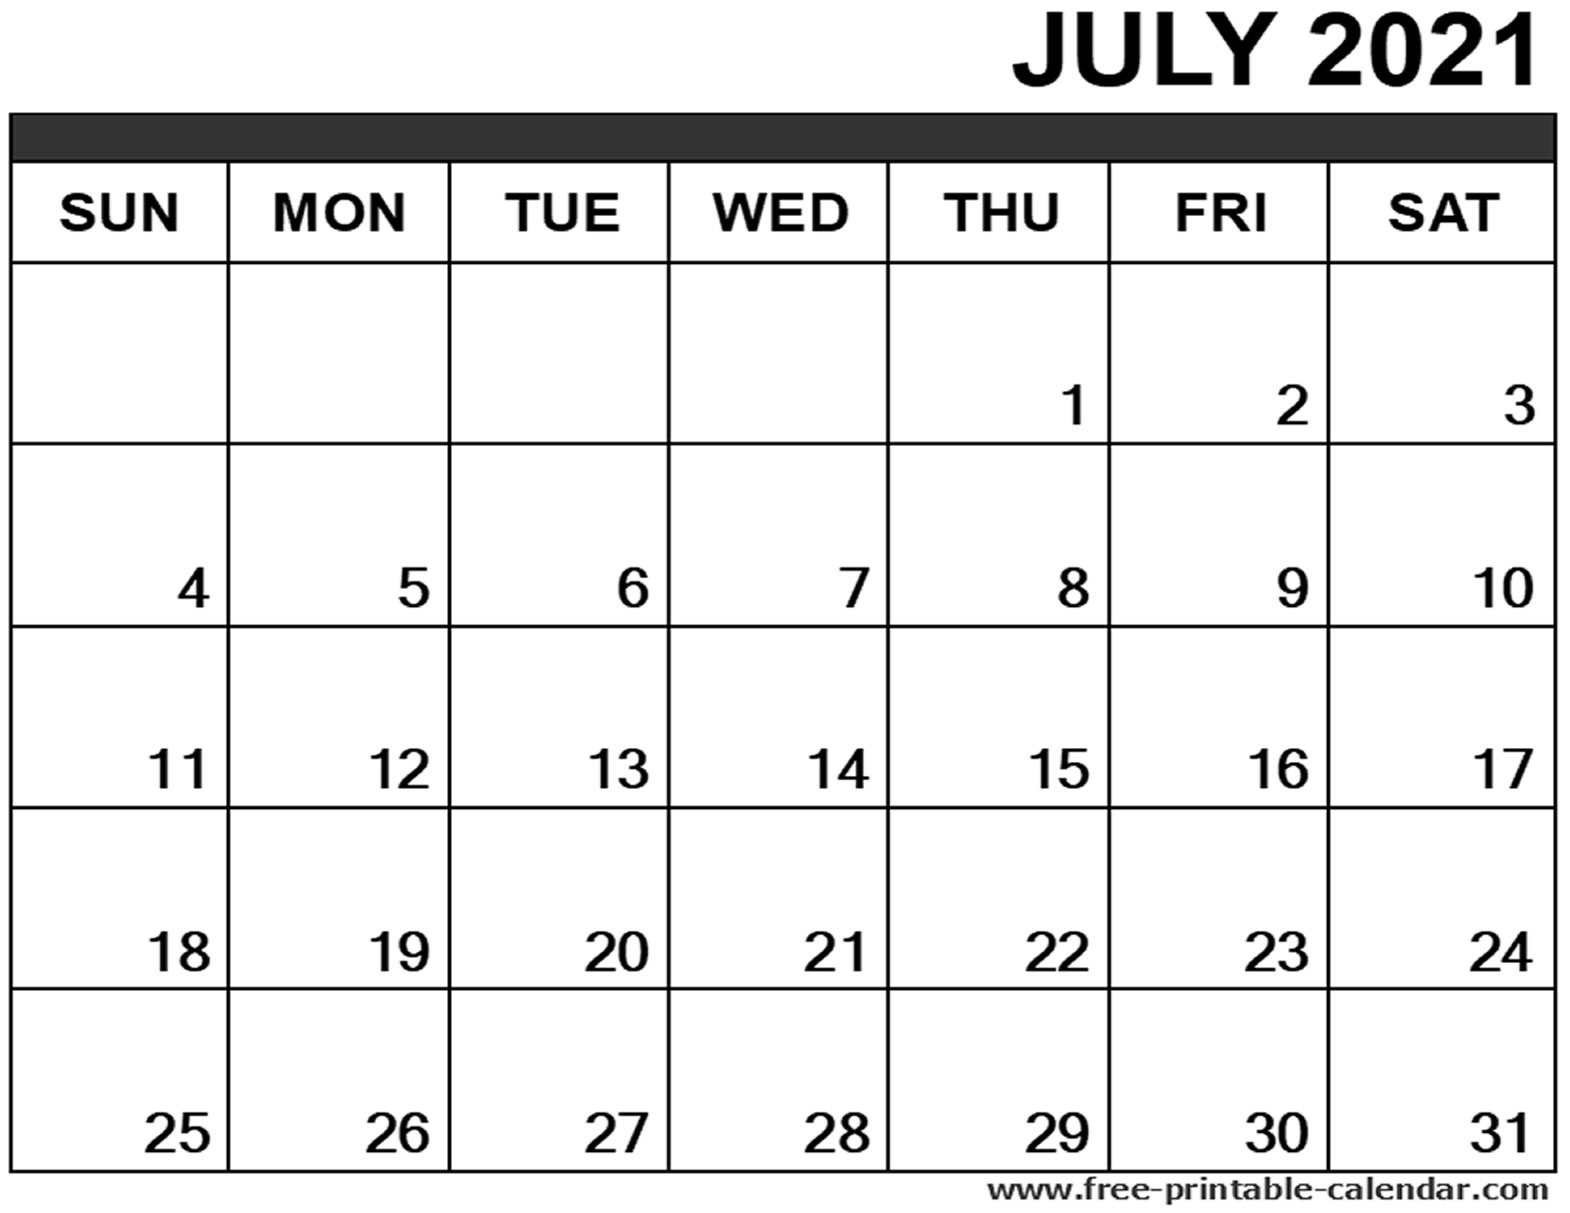 July 2021 Calendar Printable - Free-Printable-Calendar-2021 Monthly Fill In Calendars